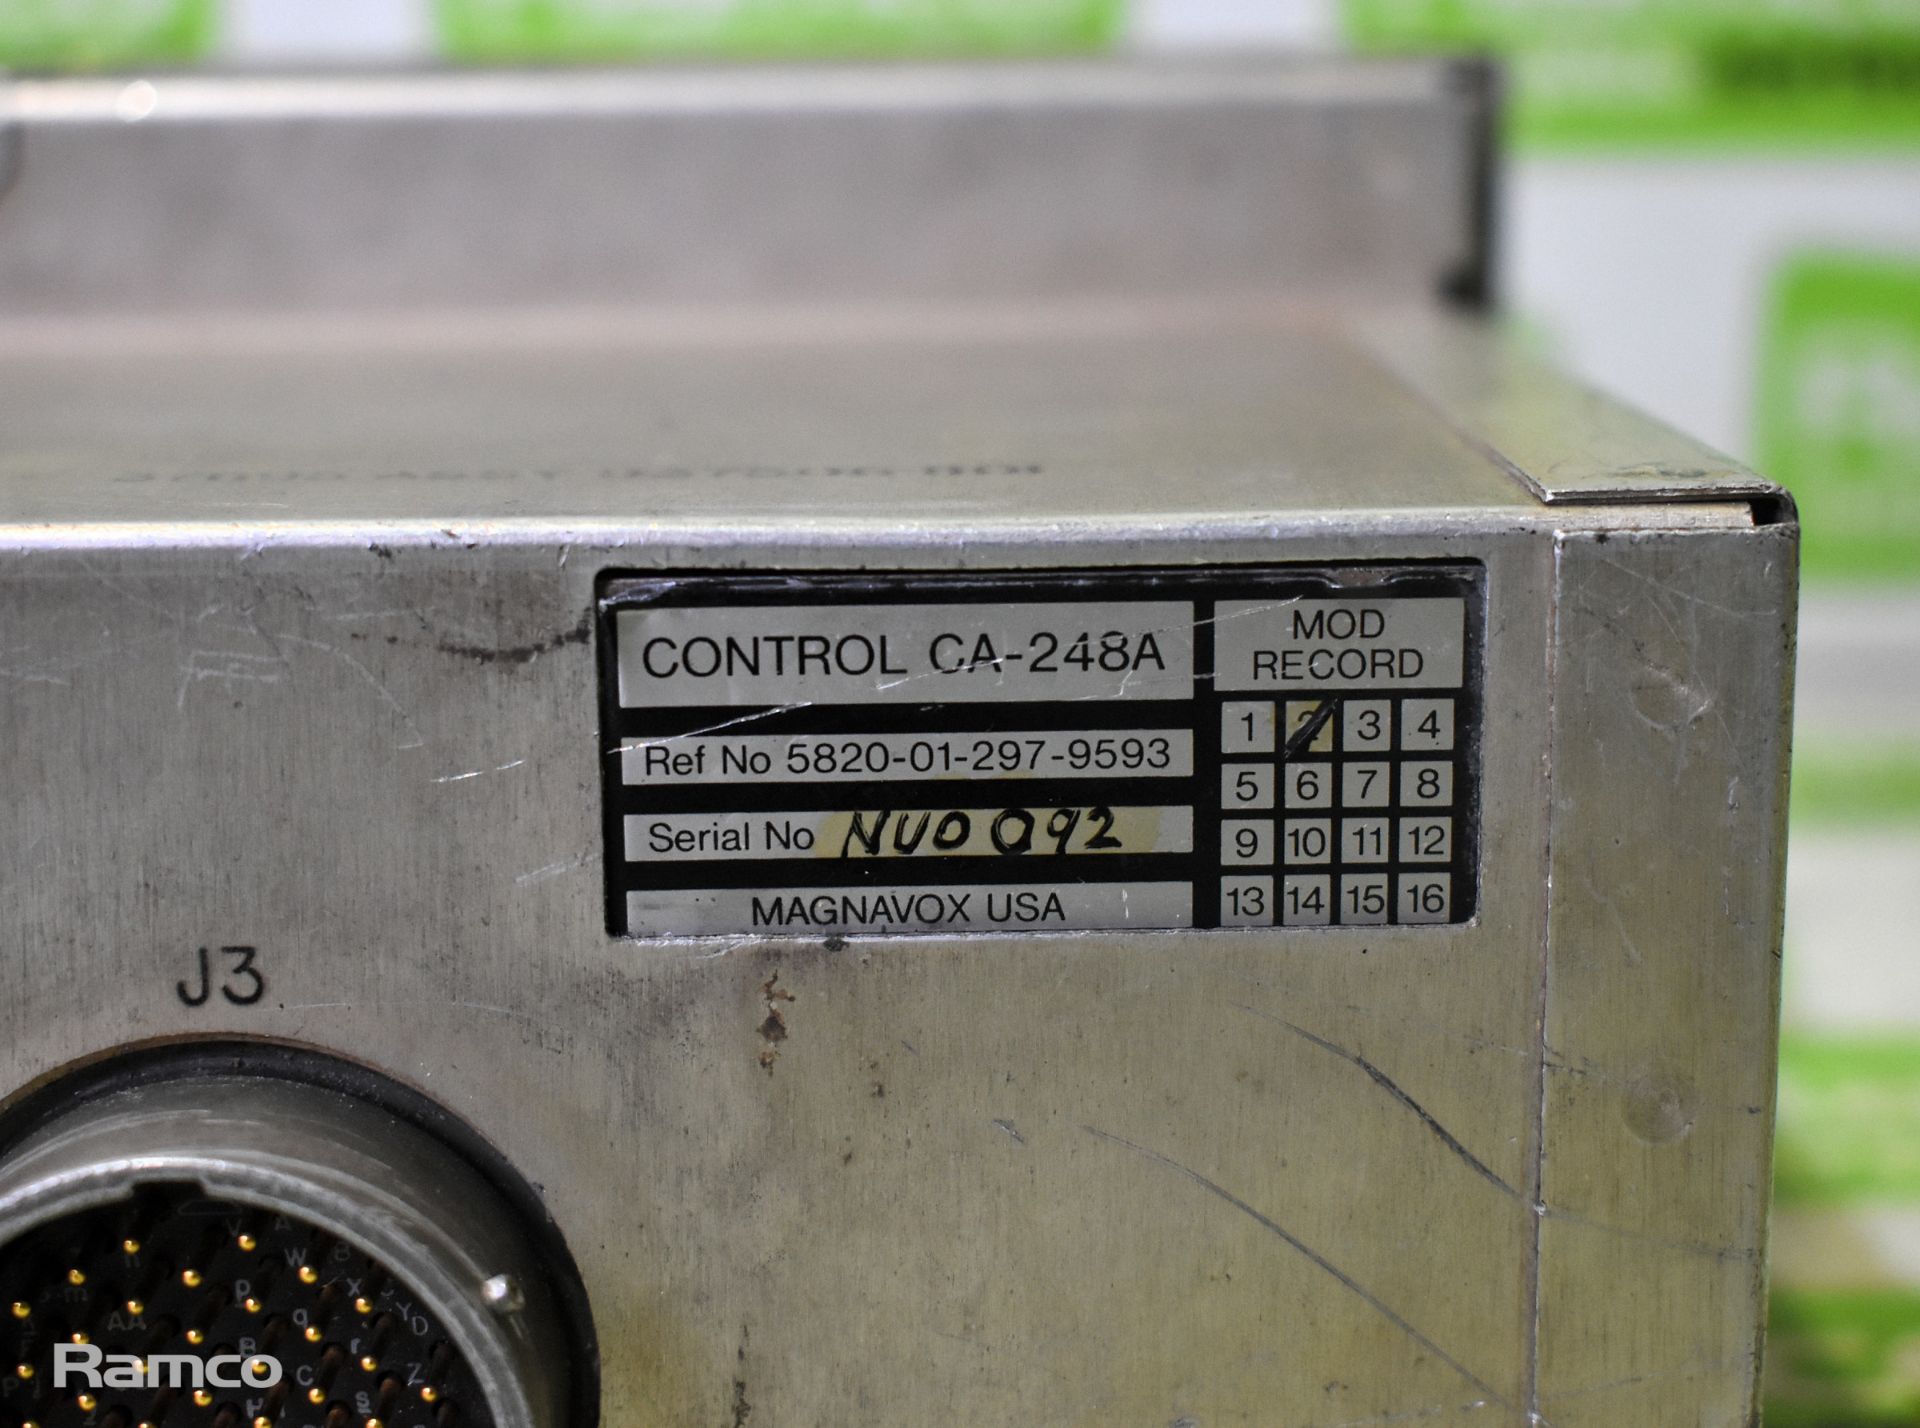 10x Magnavox USA Control CA-248A radio transmitter/receivers - Image 4 of 5